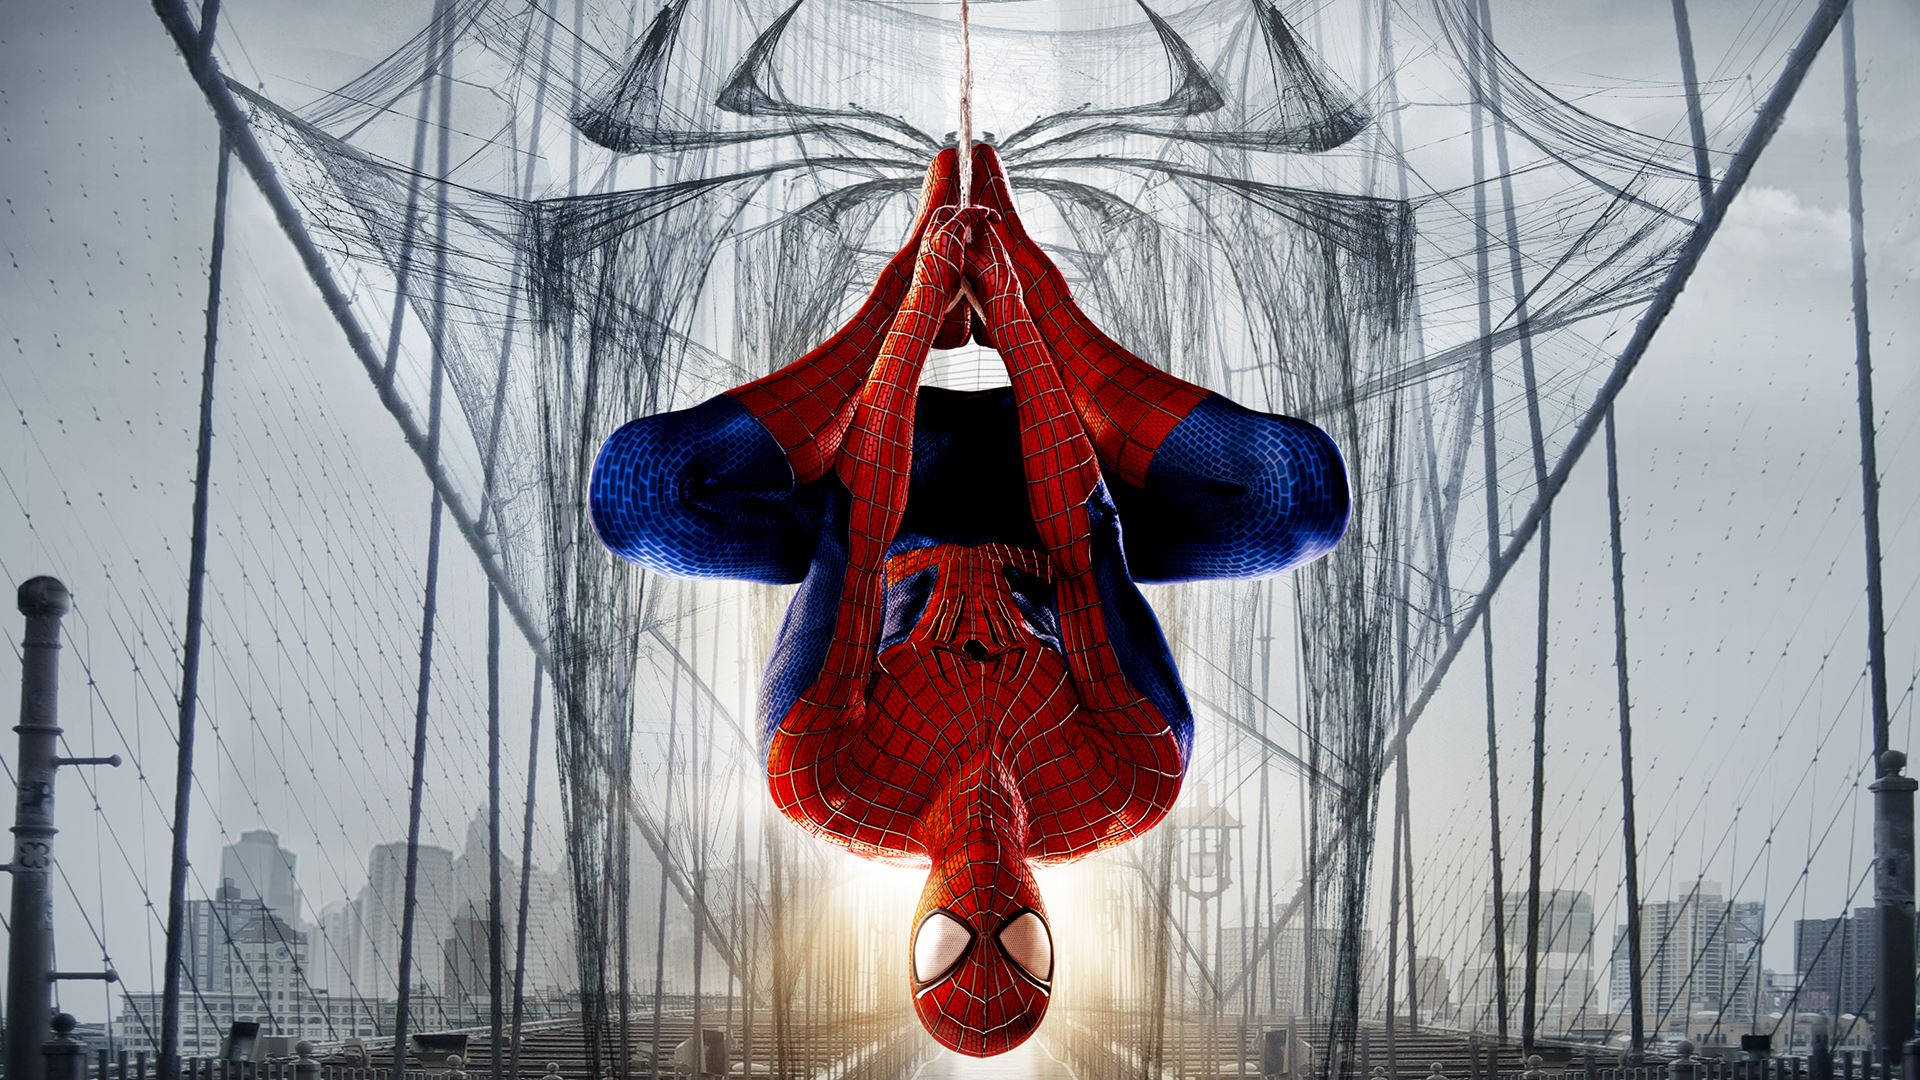 Amazing Spiderman In Bridge Background